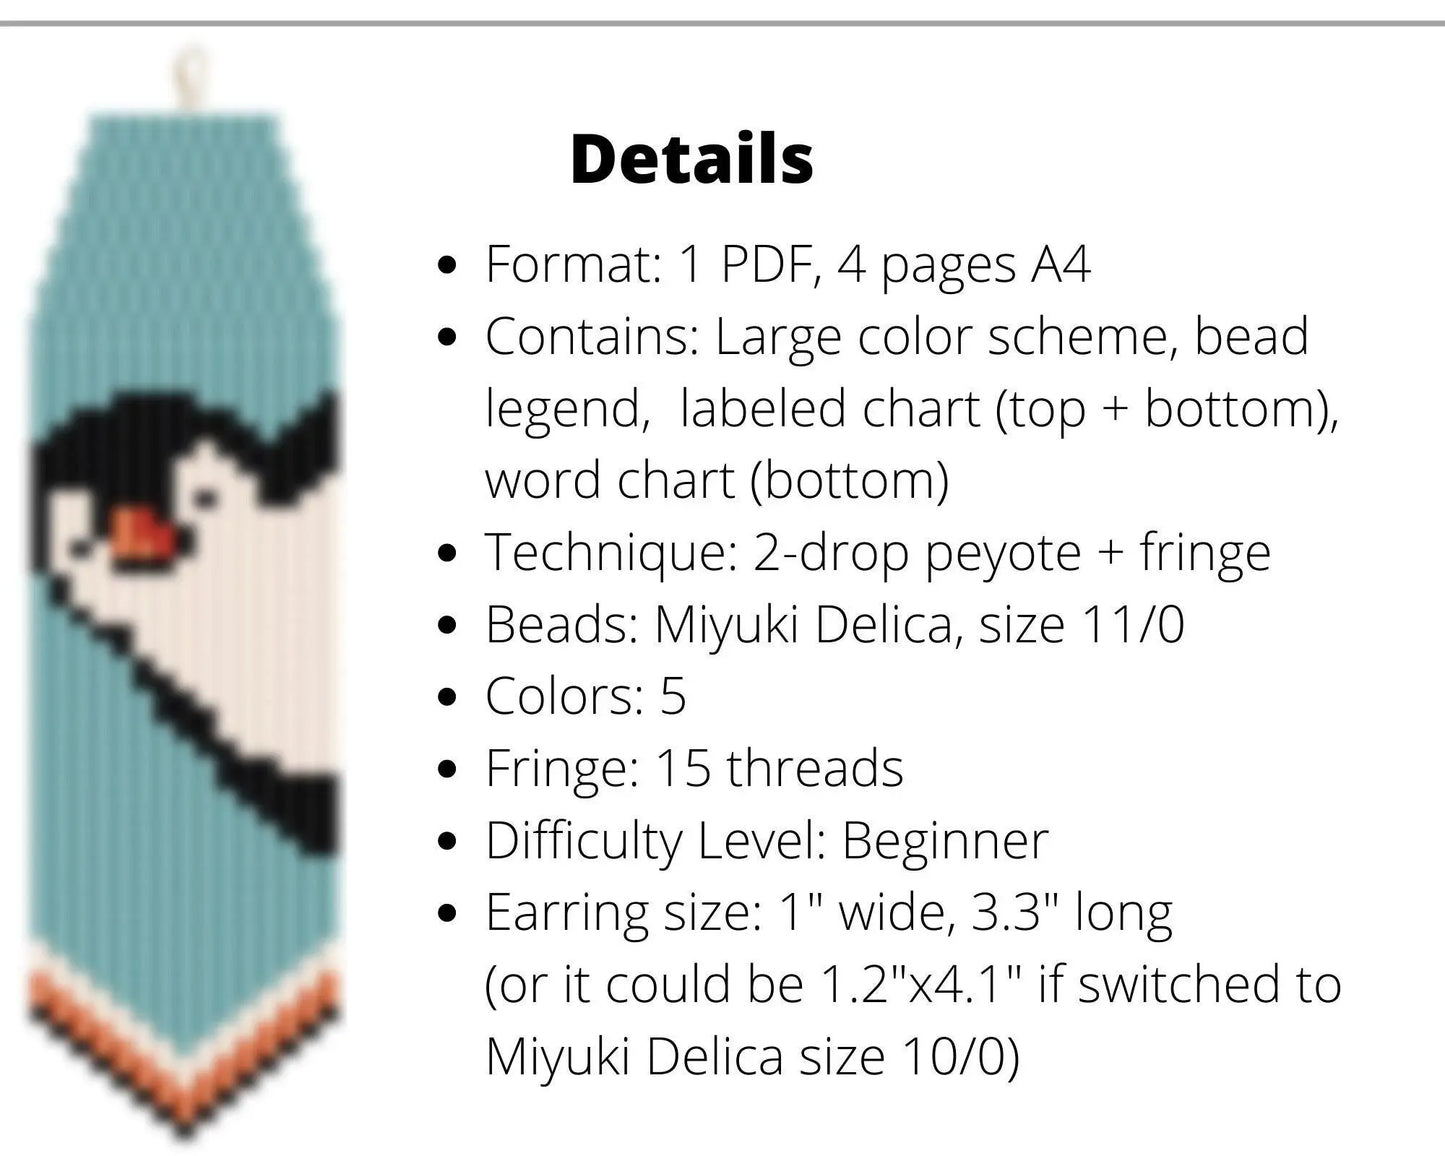 Penguin Brick Stitch pattern for fringe beaded earrings - NikoBeadsUA